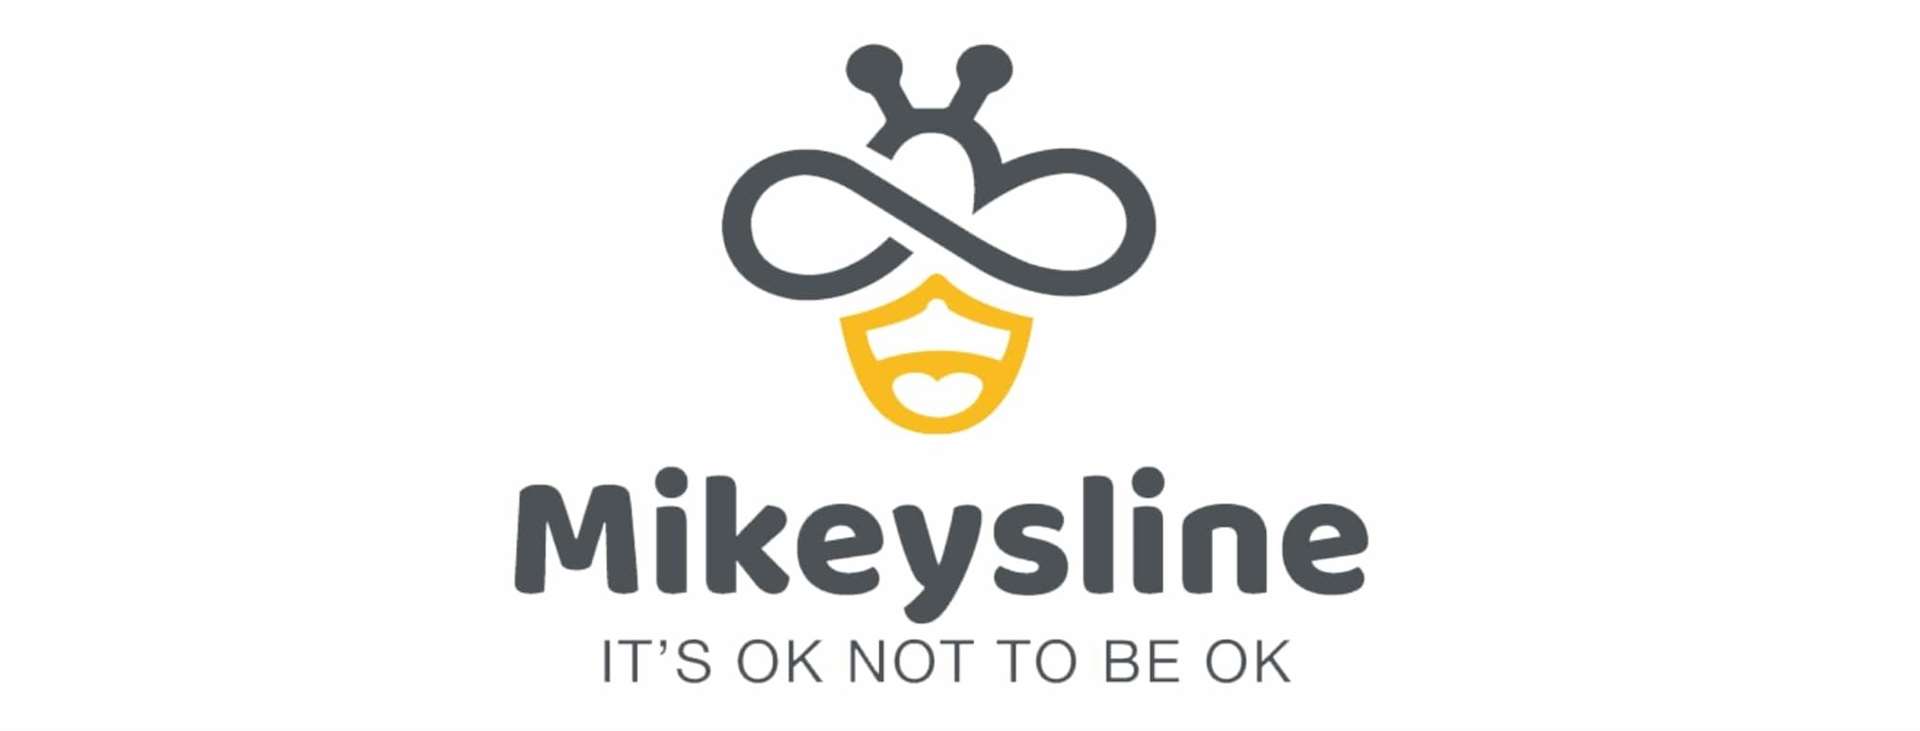 Mikeysline.